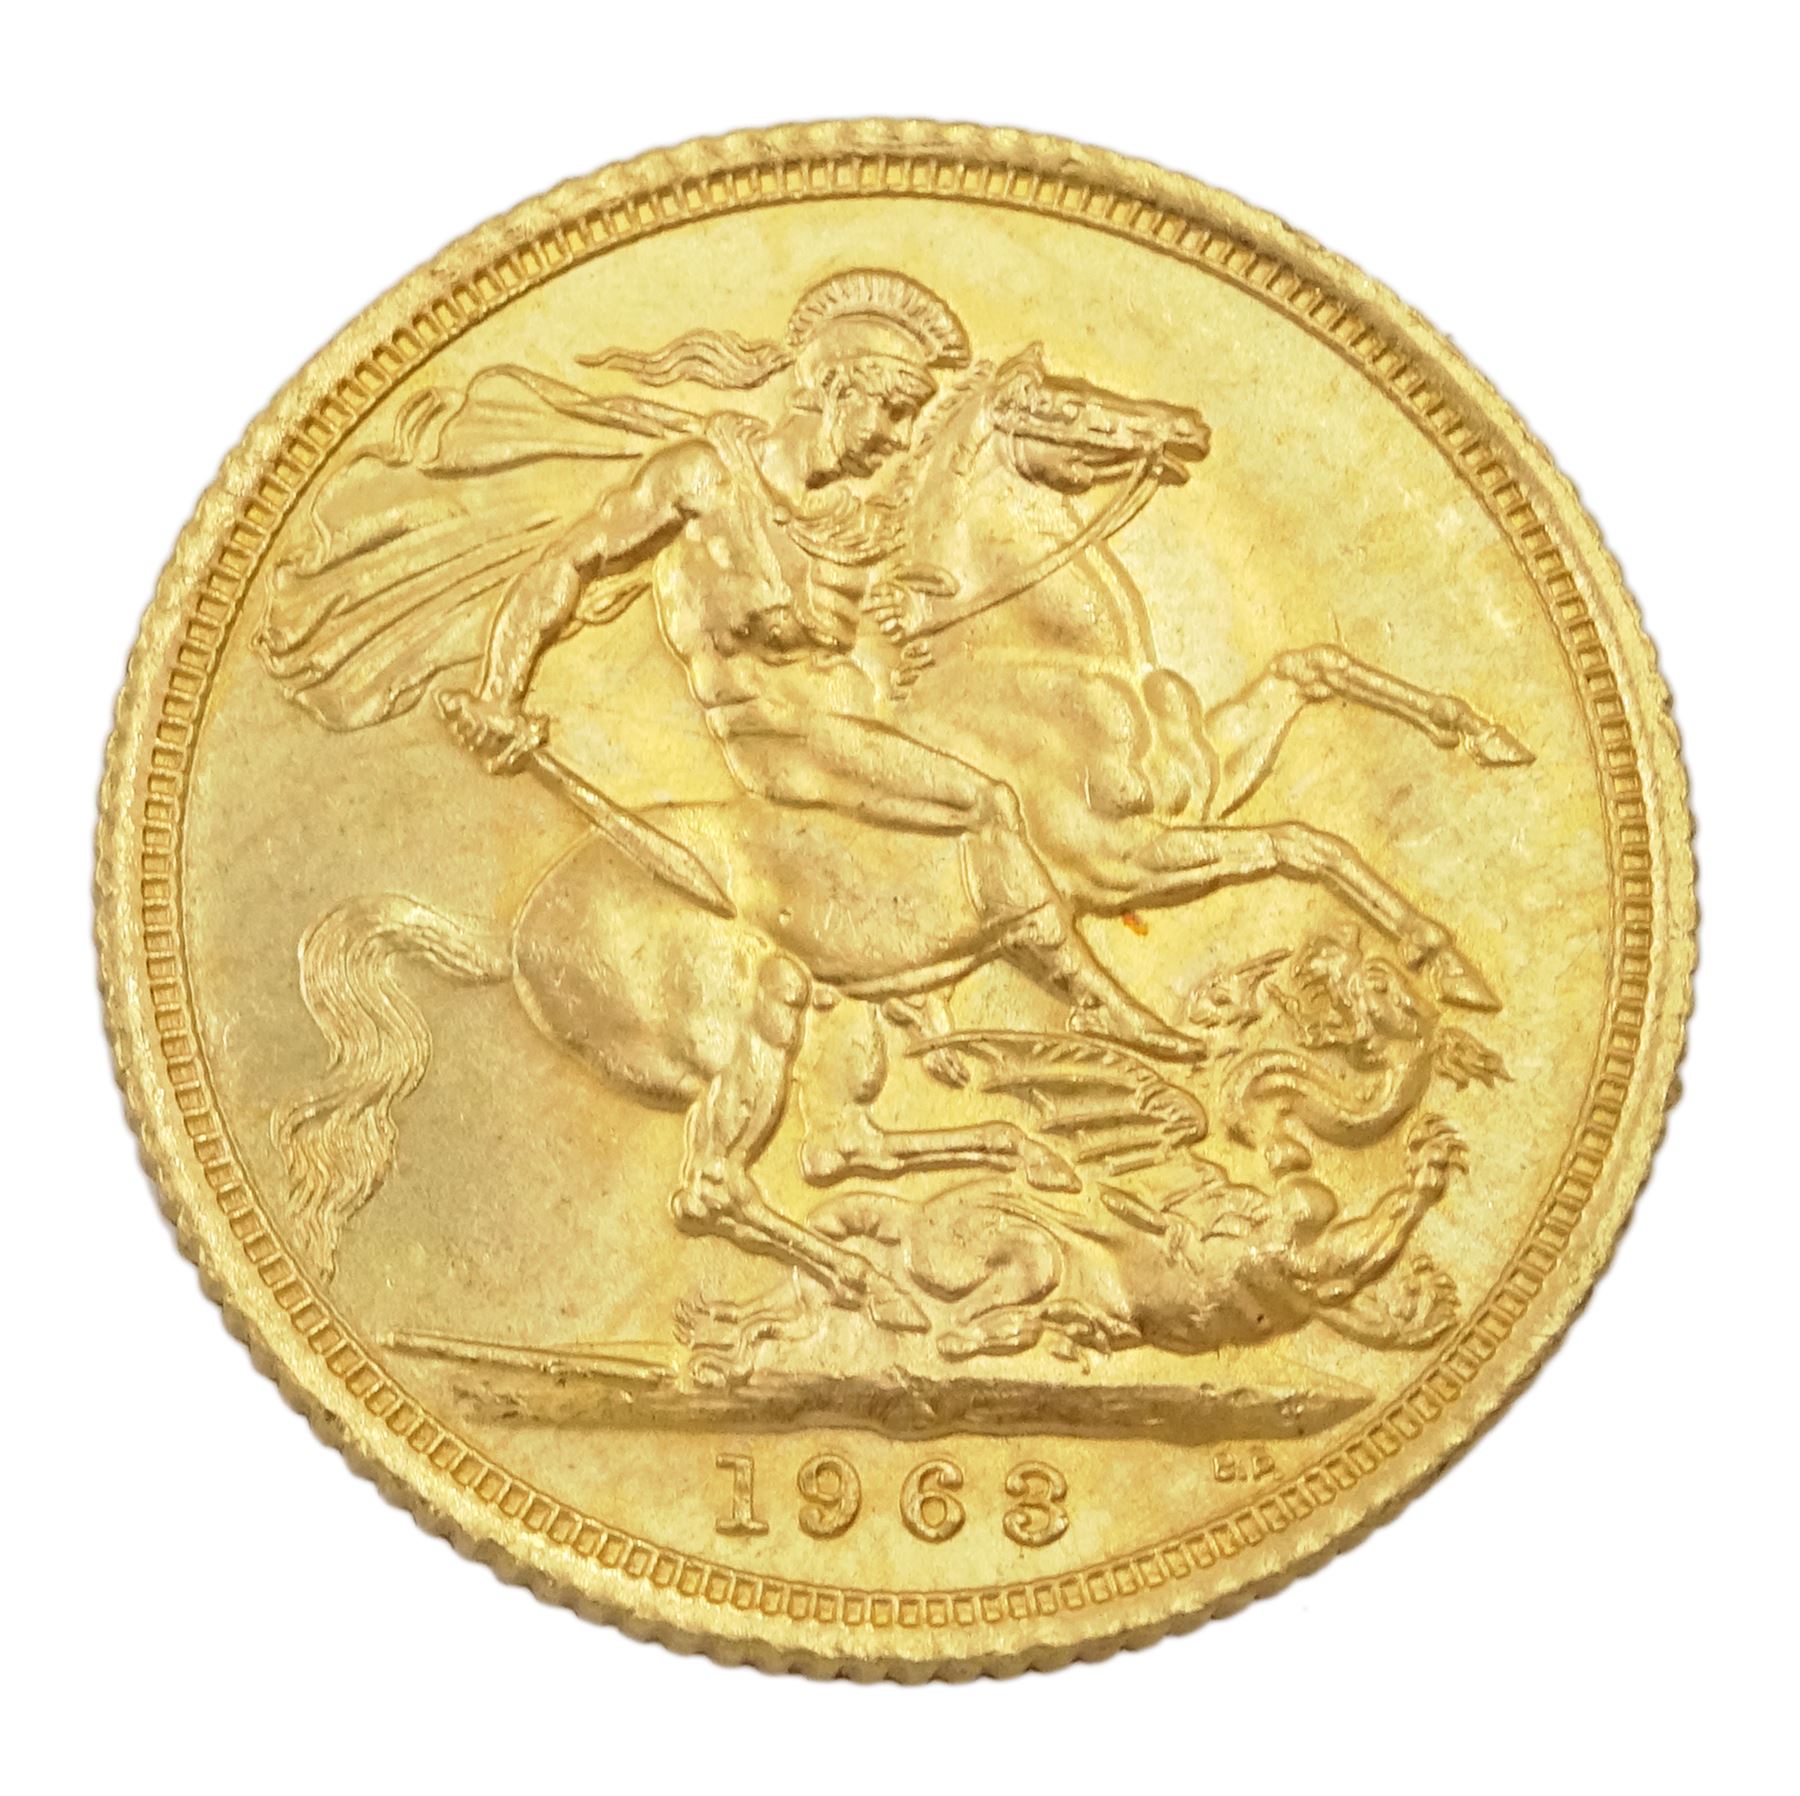 Queen Elizabeth II 1963 gold full sovereign coin - Image 3 of 3